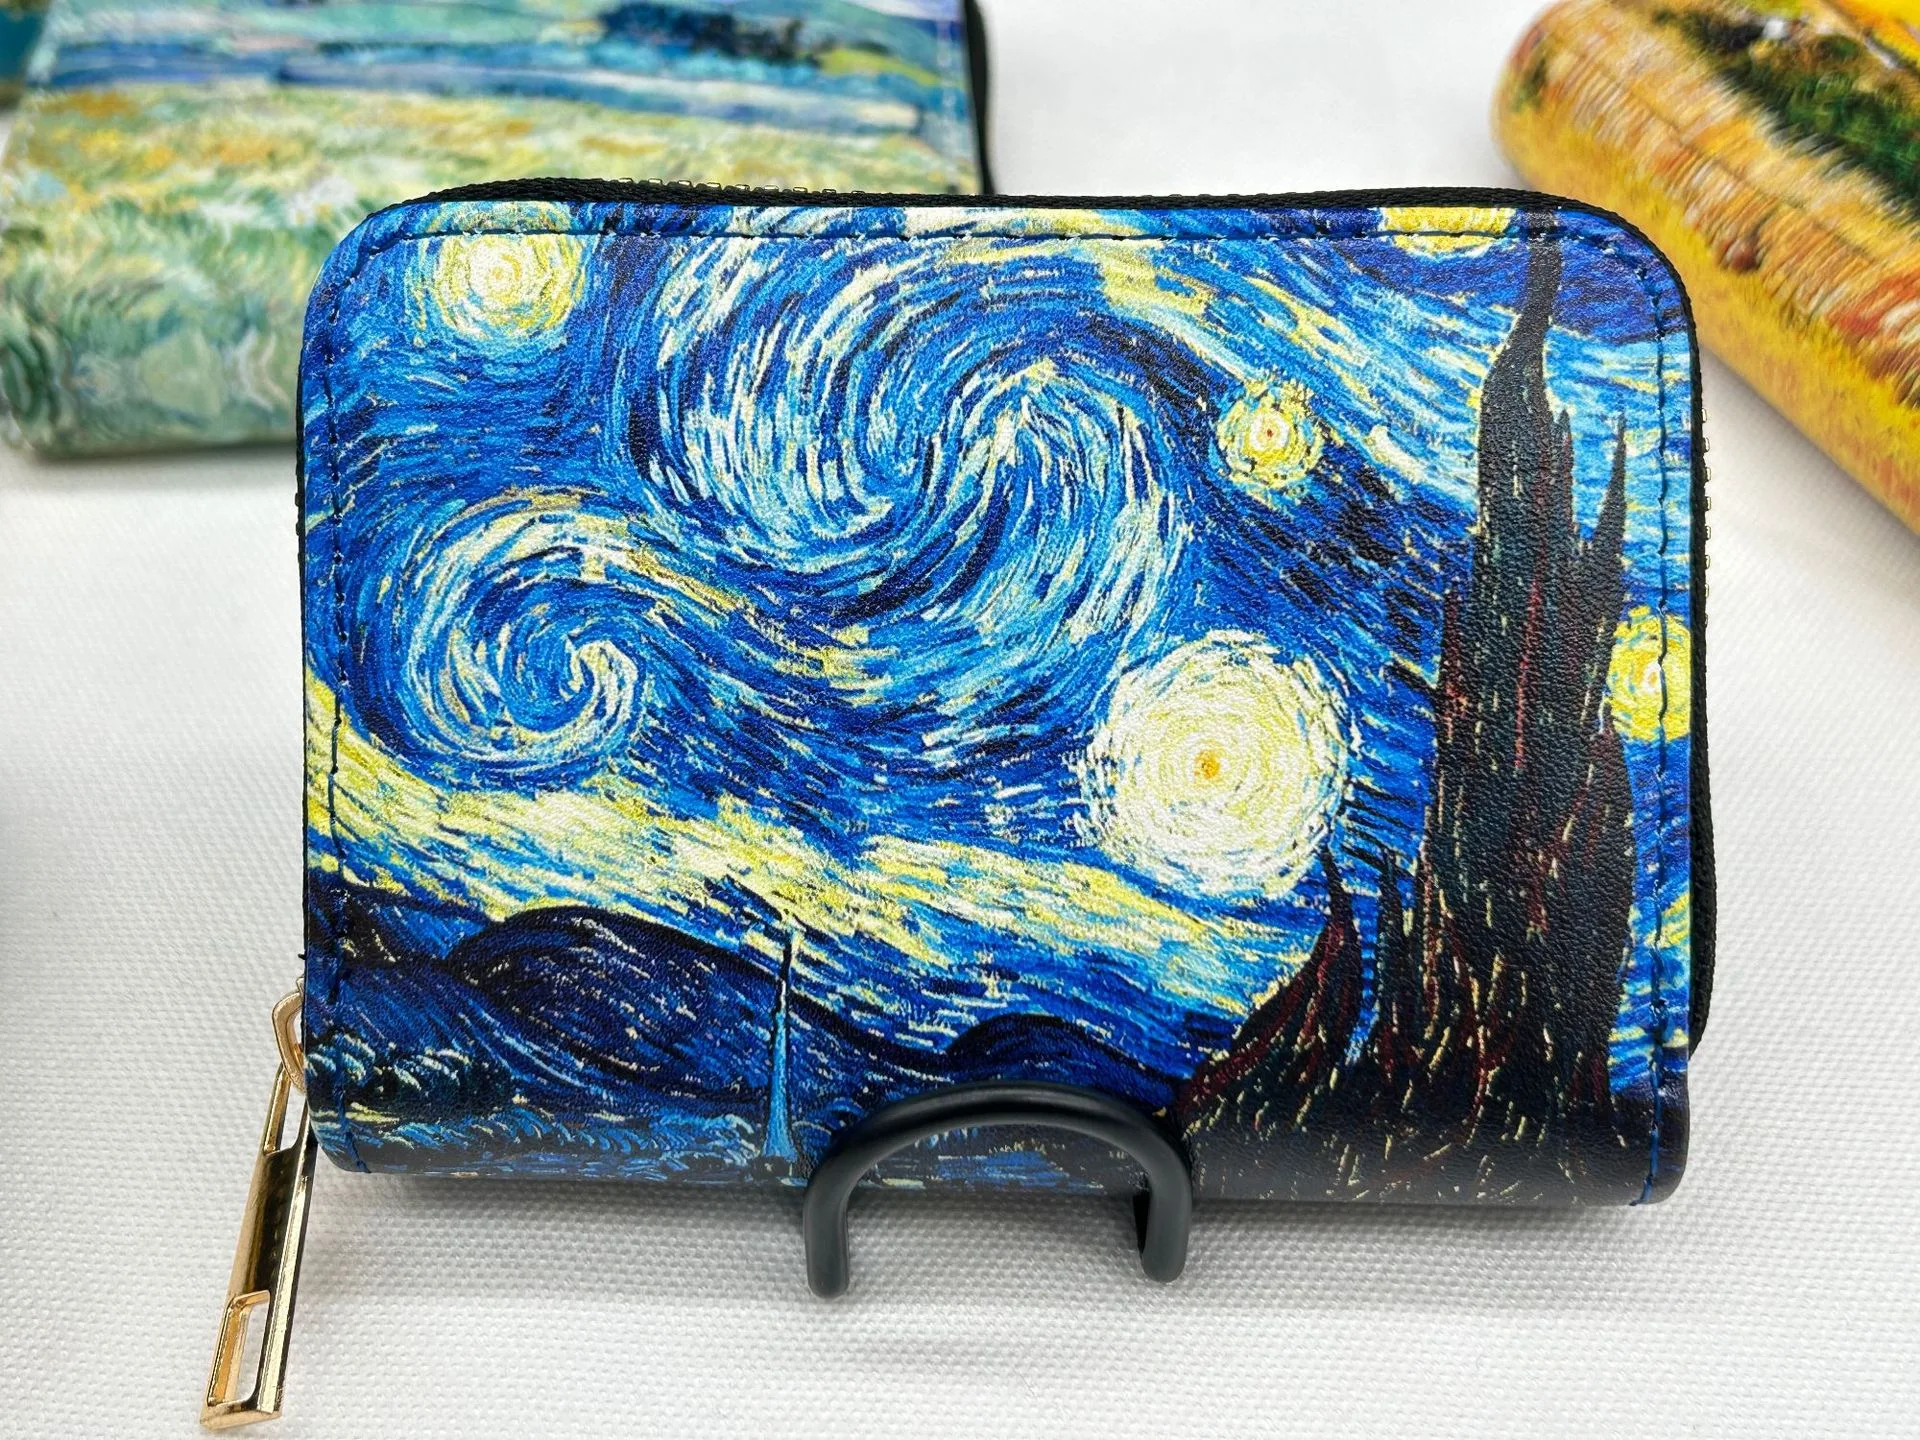 

New PU Leather Printing Coin Card Zipper Wallet Fashion Van Gogh Paintings Men Women Credit Passport Card Bag Holder Souvenirs